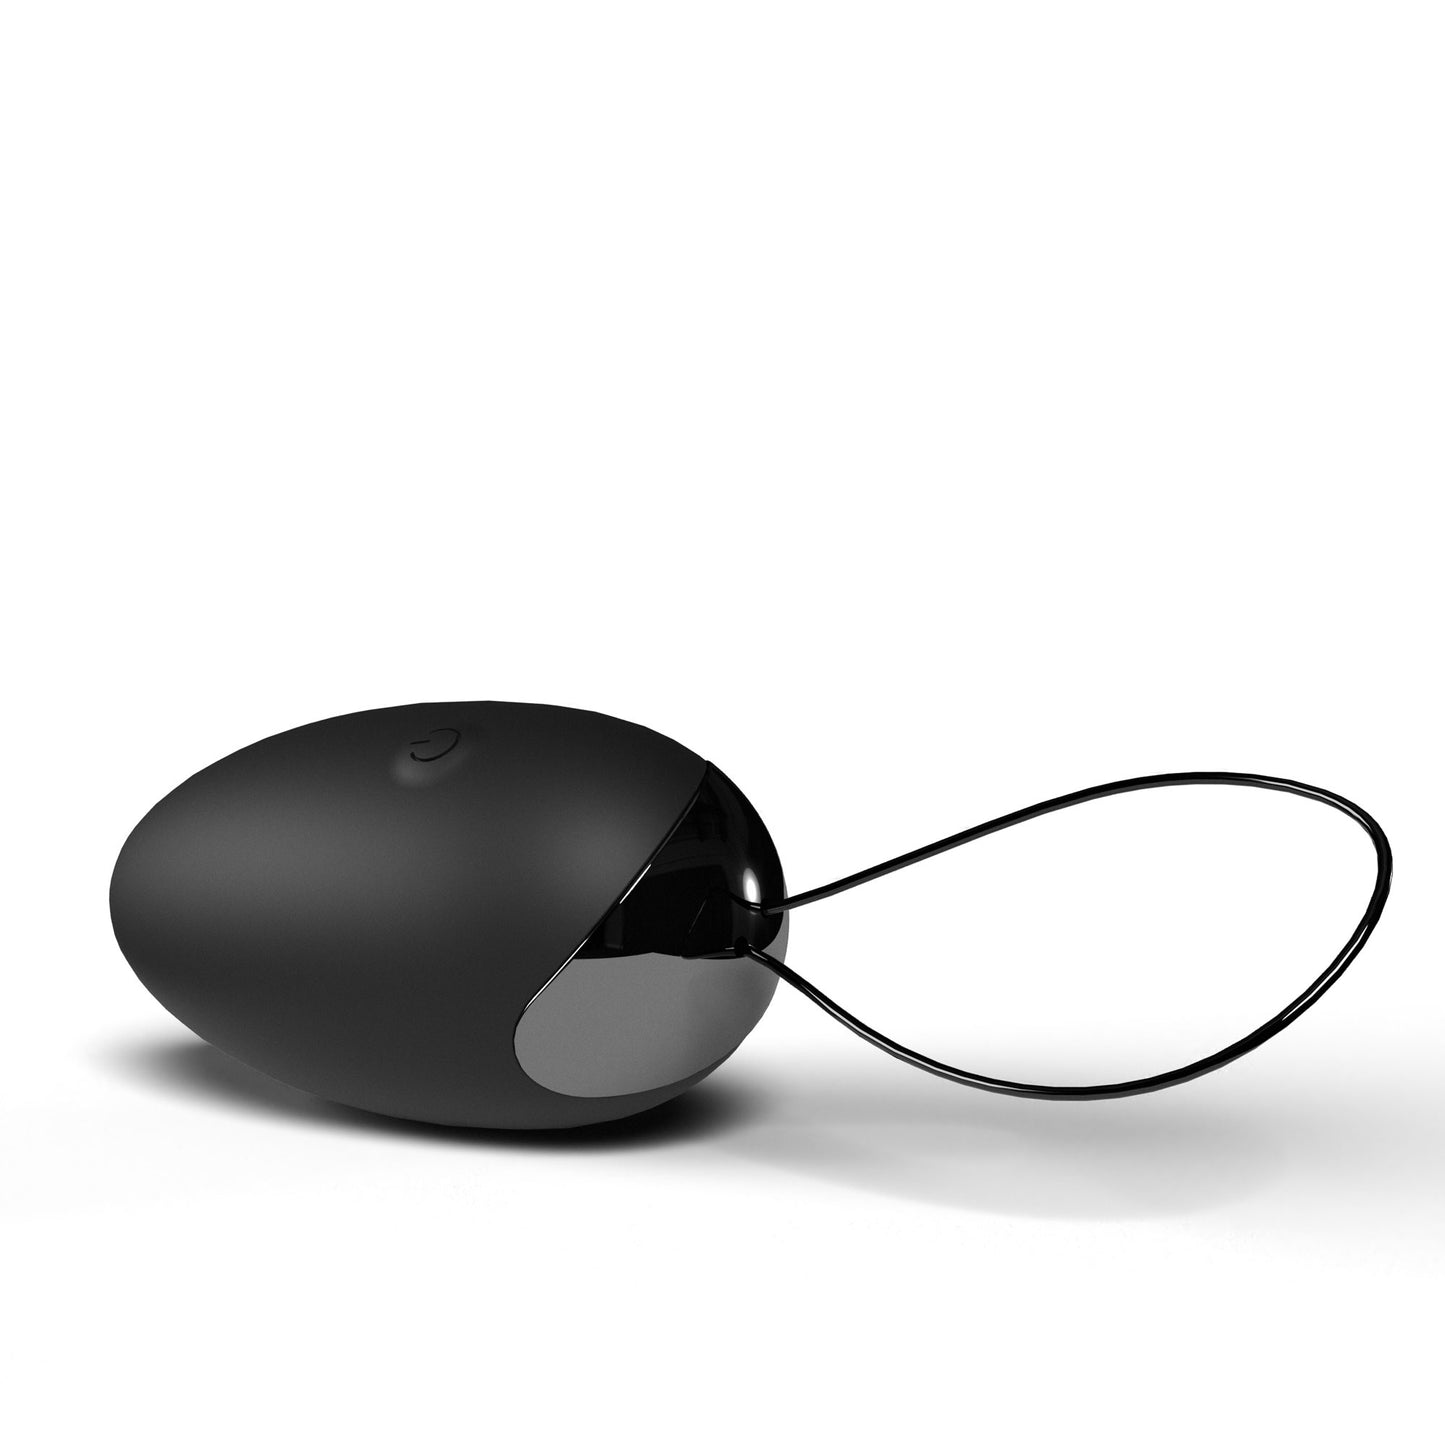 Premium Dual Vibe Remote and Egg - Black